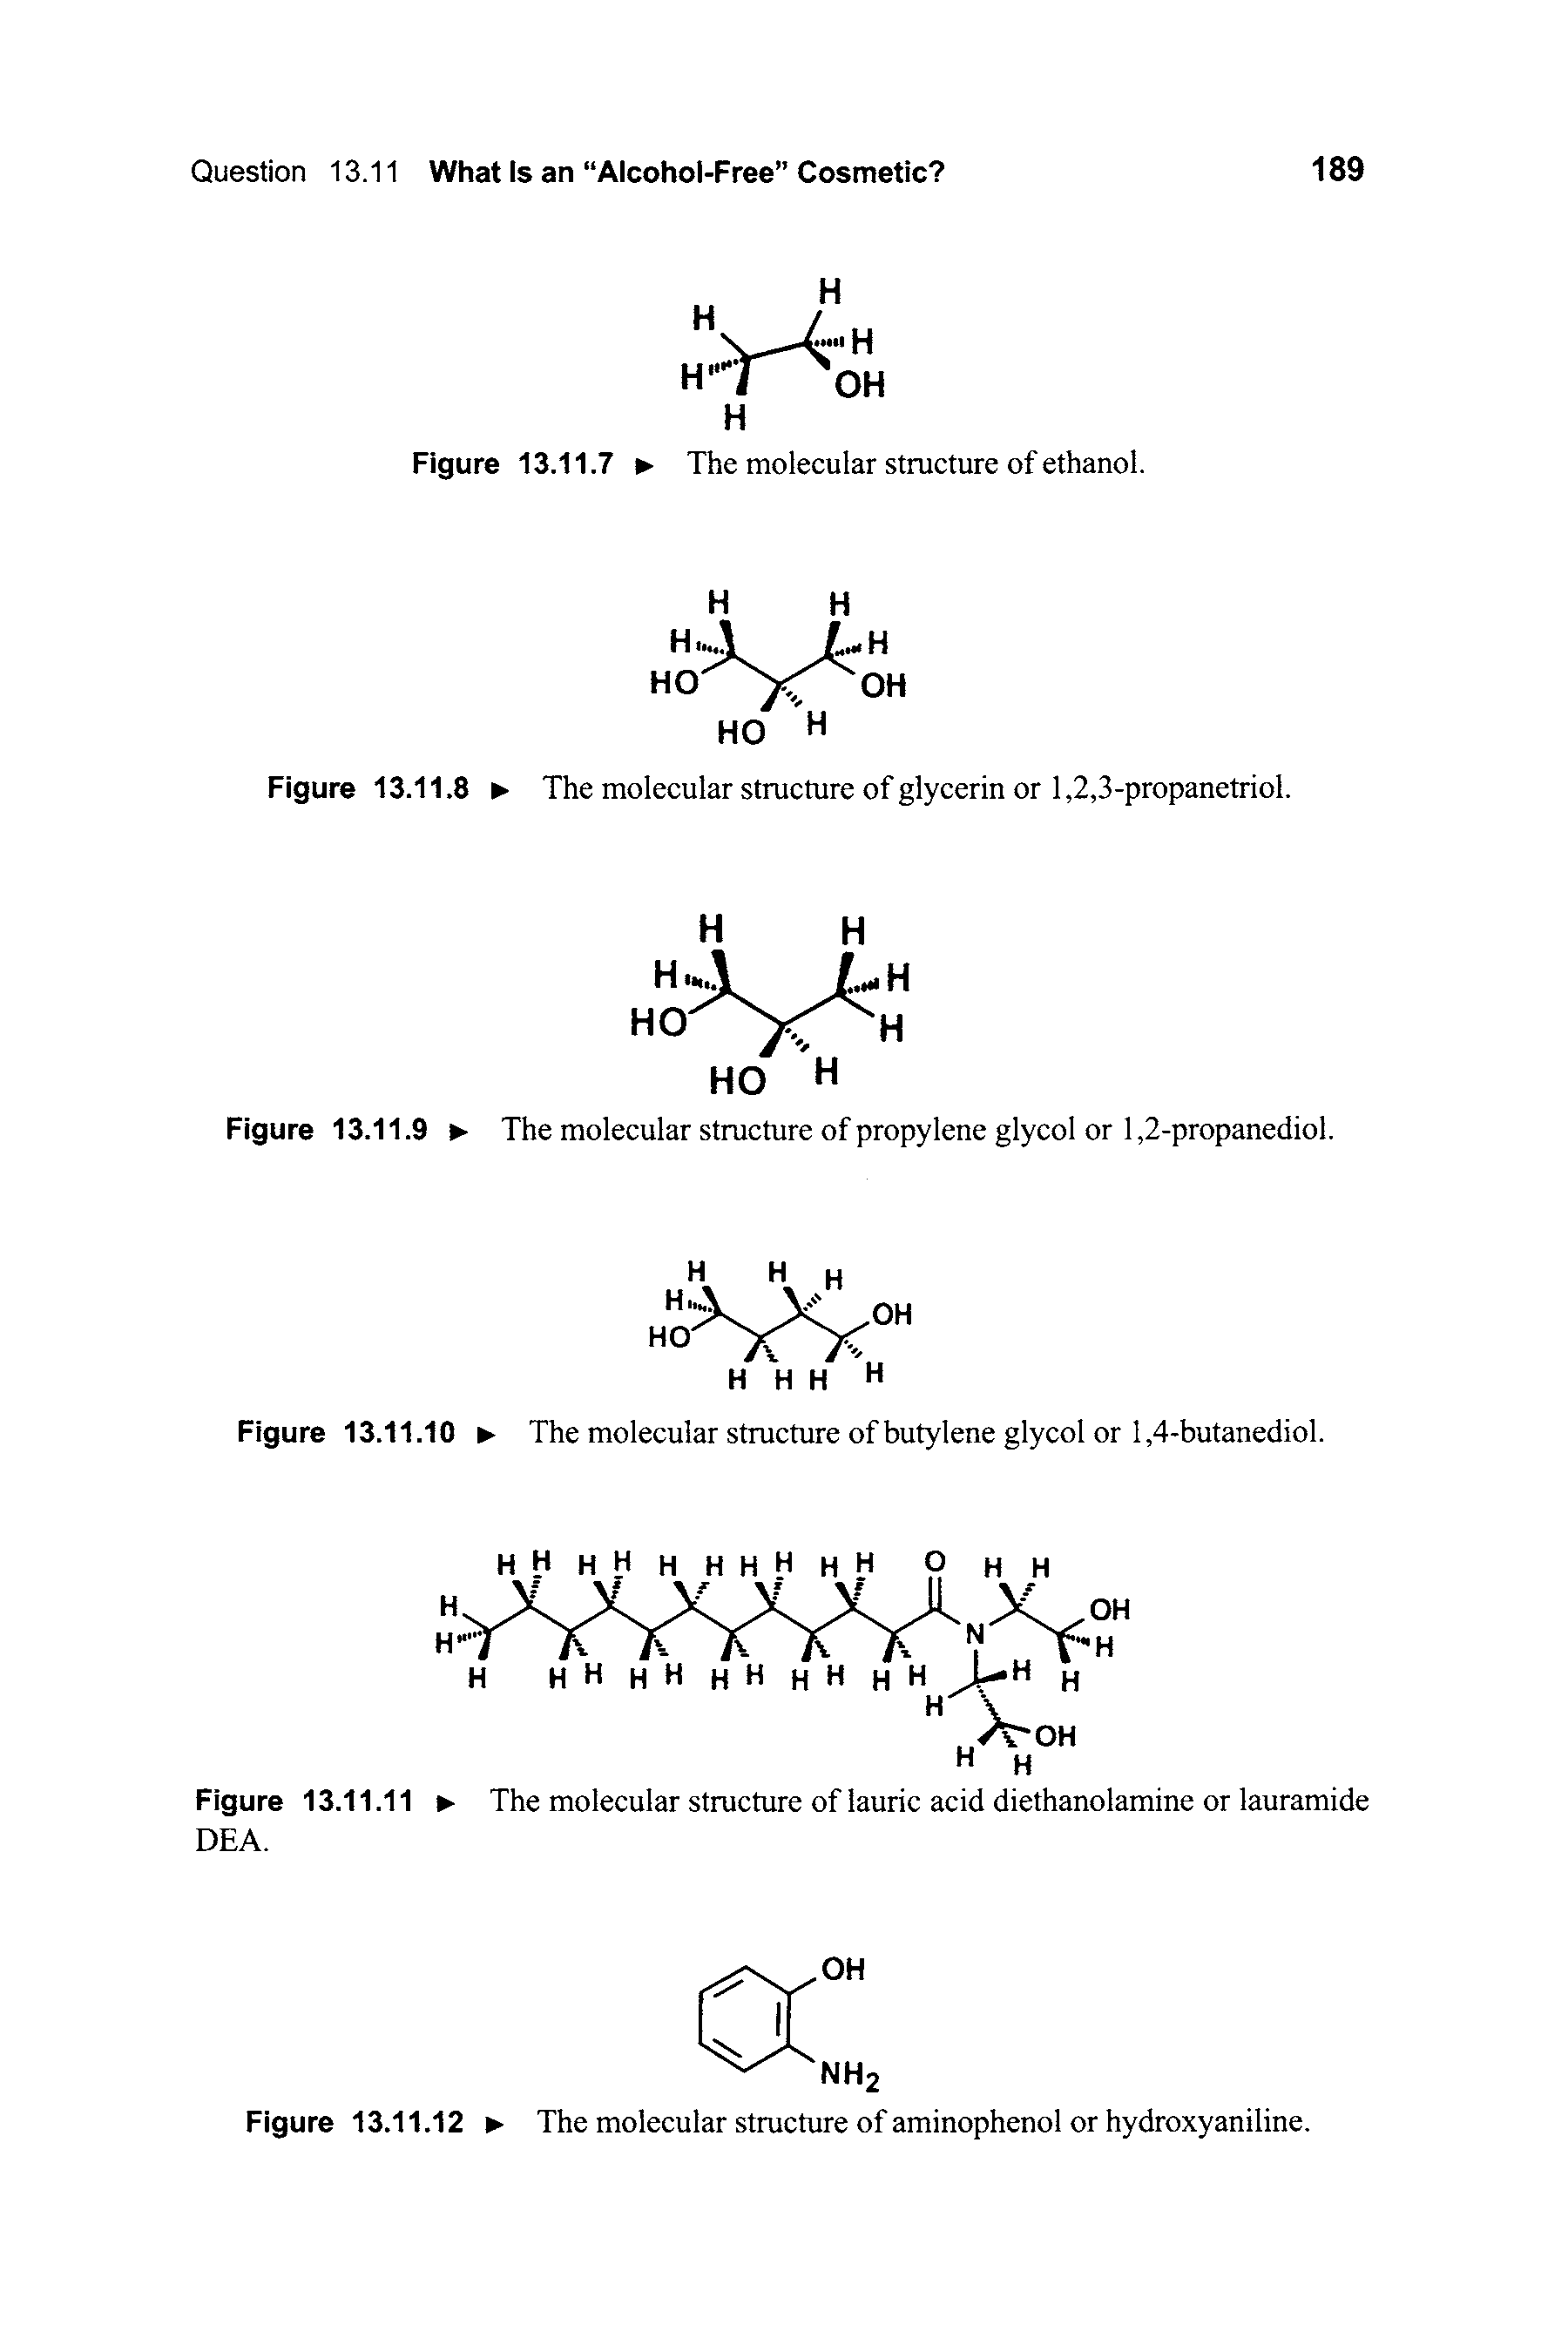 Figure 13.11.10 The molecular structure of butylene glycol or 1,4-butanediol.